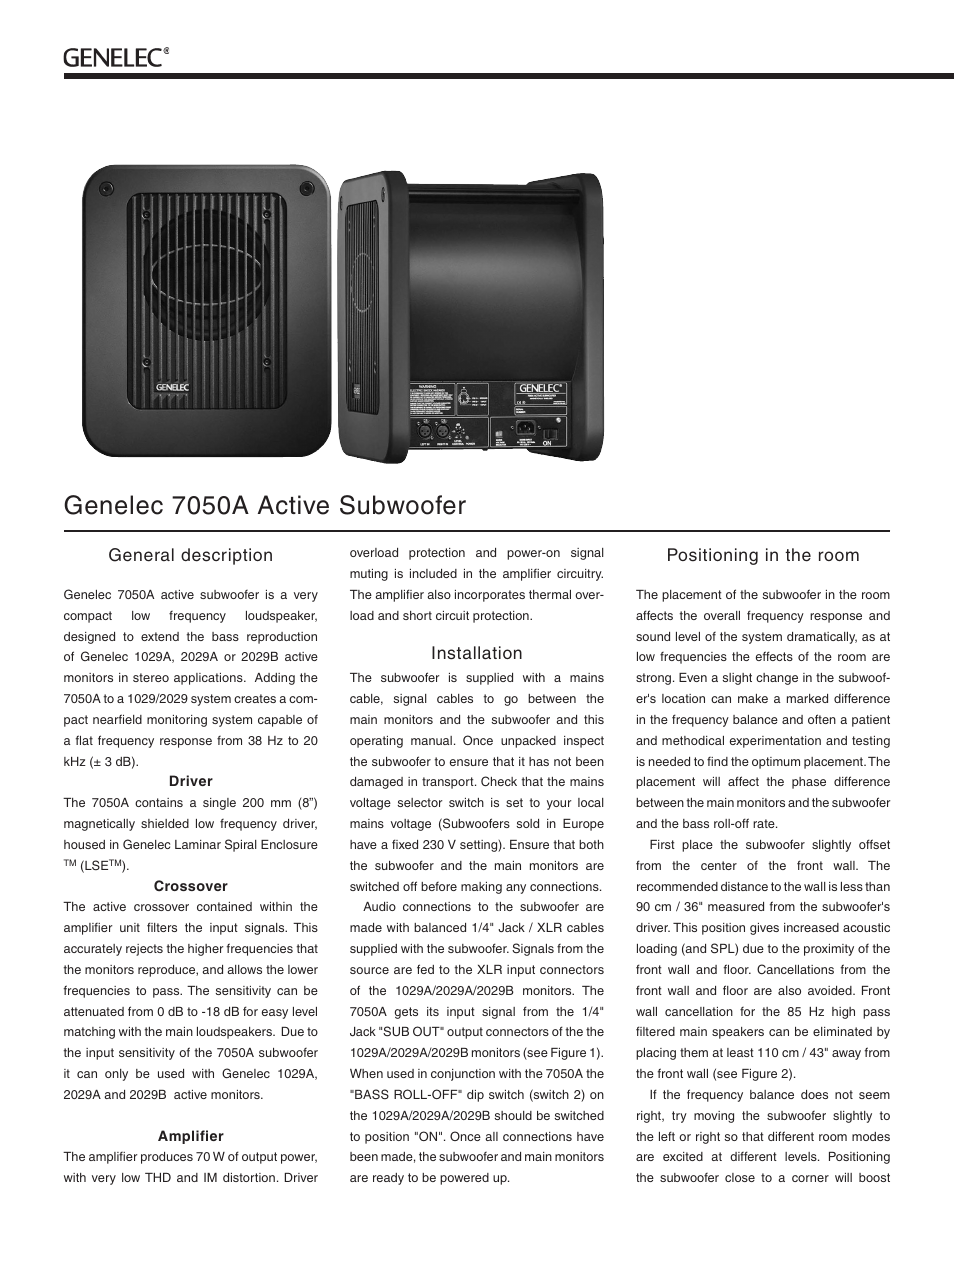 Genelec 7050a active subwoofer, General description, Installation | Genelec  7050A User Manual | Page 2 / 4 | Original mode